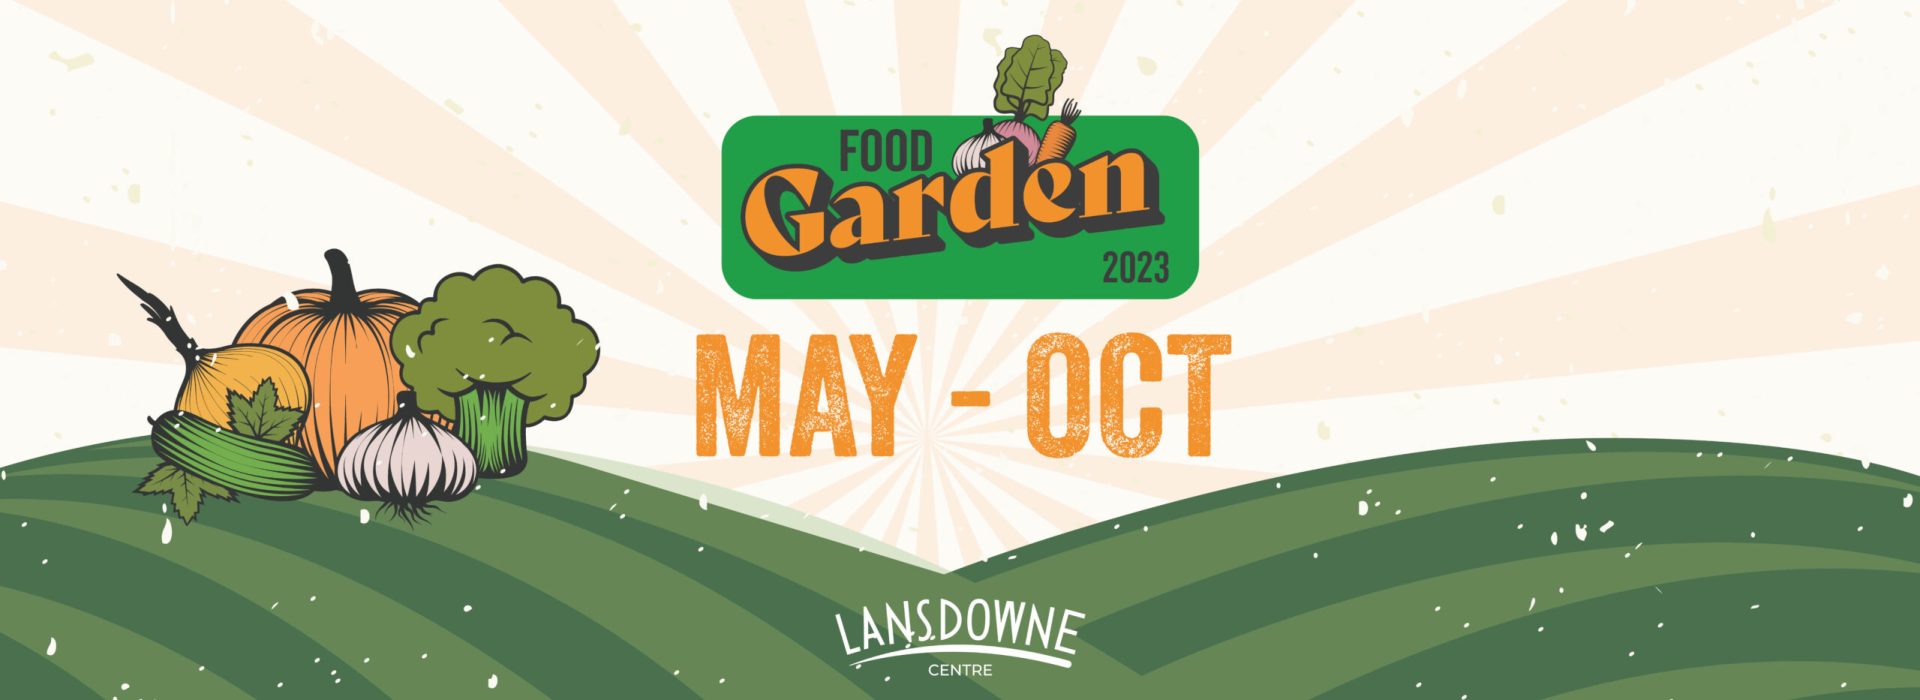 lansdowne centre food garden